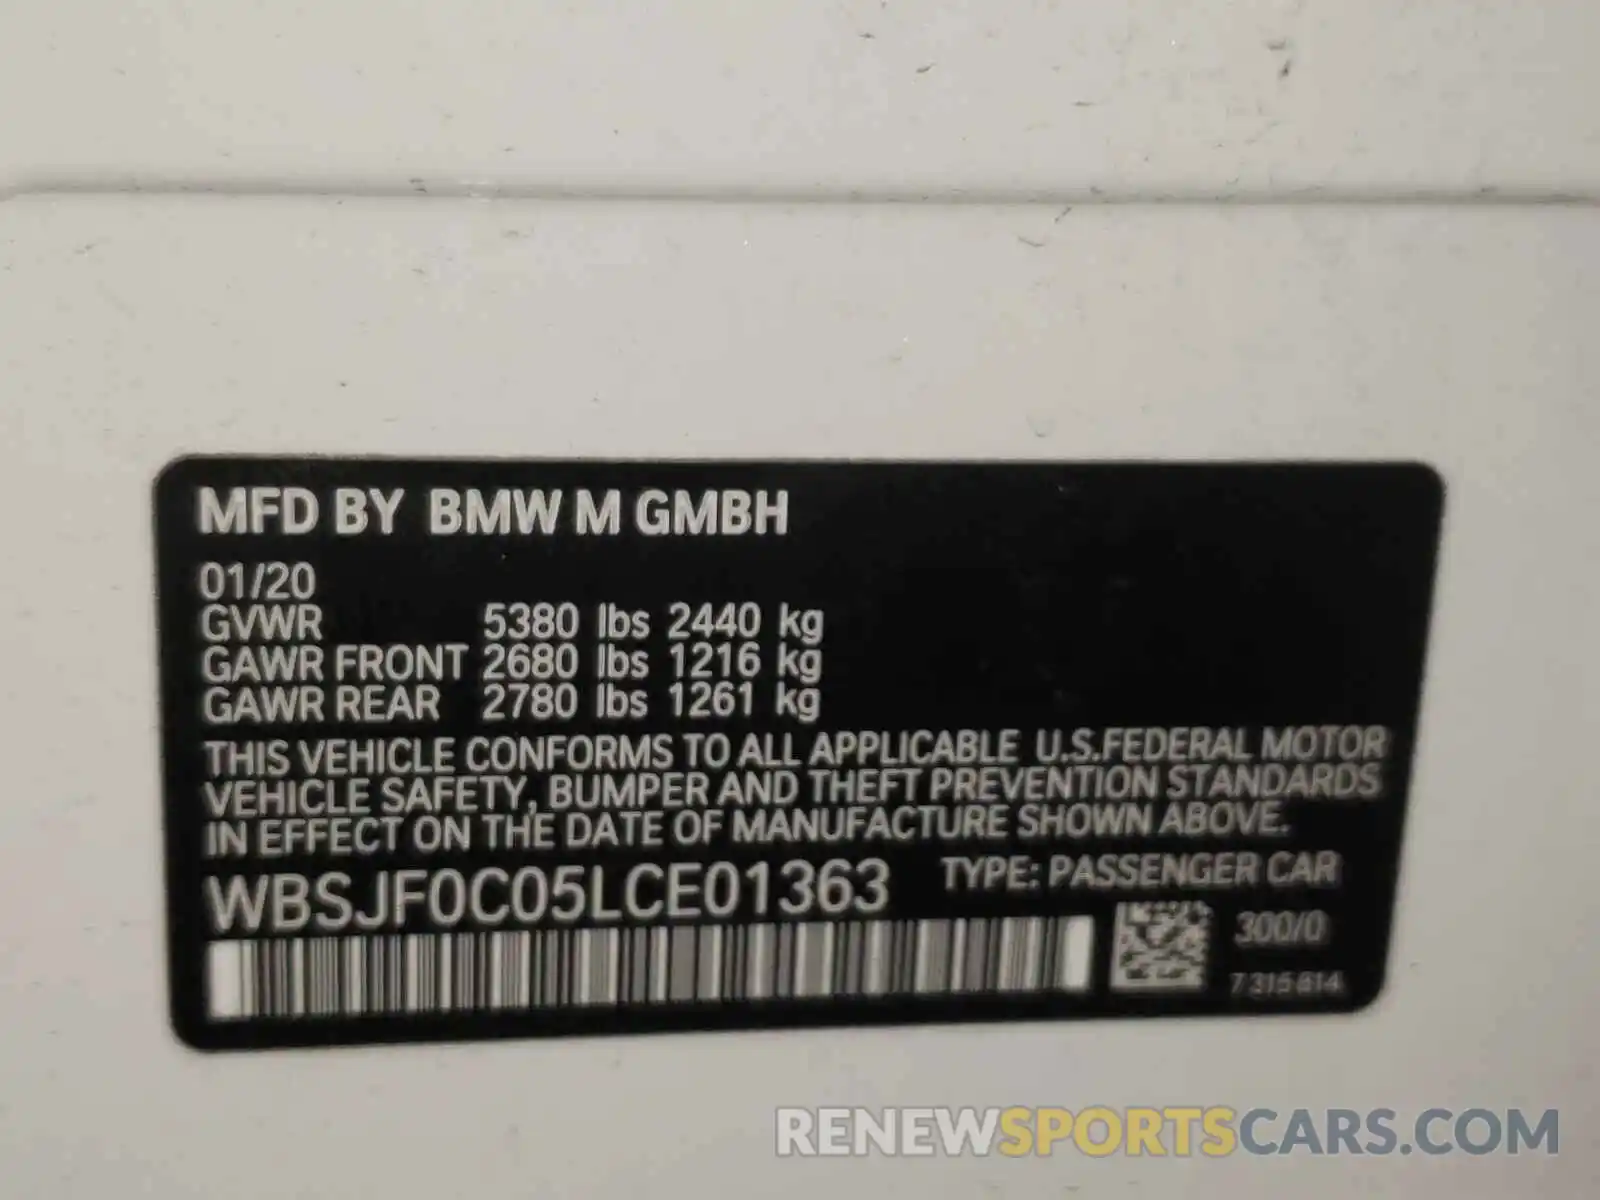 10 Фотография поврежденного автомобиля WBSJF0C05LCE01363 BMW M5 2020